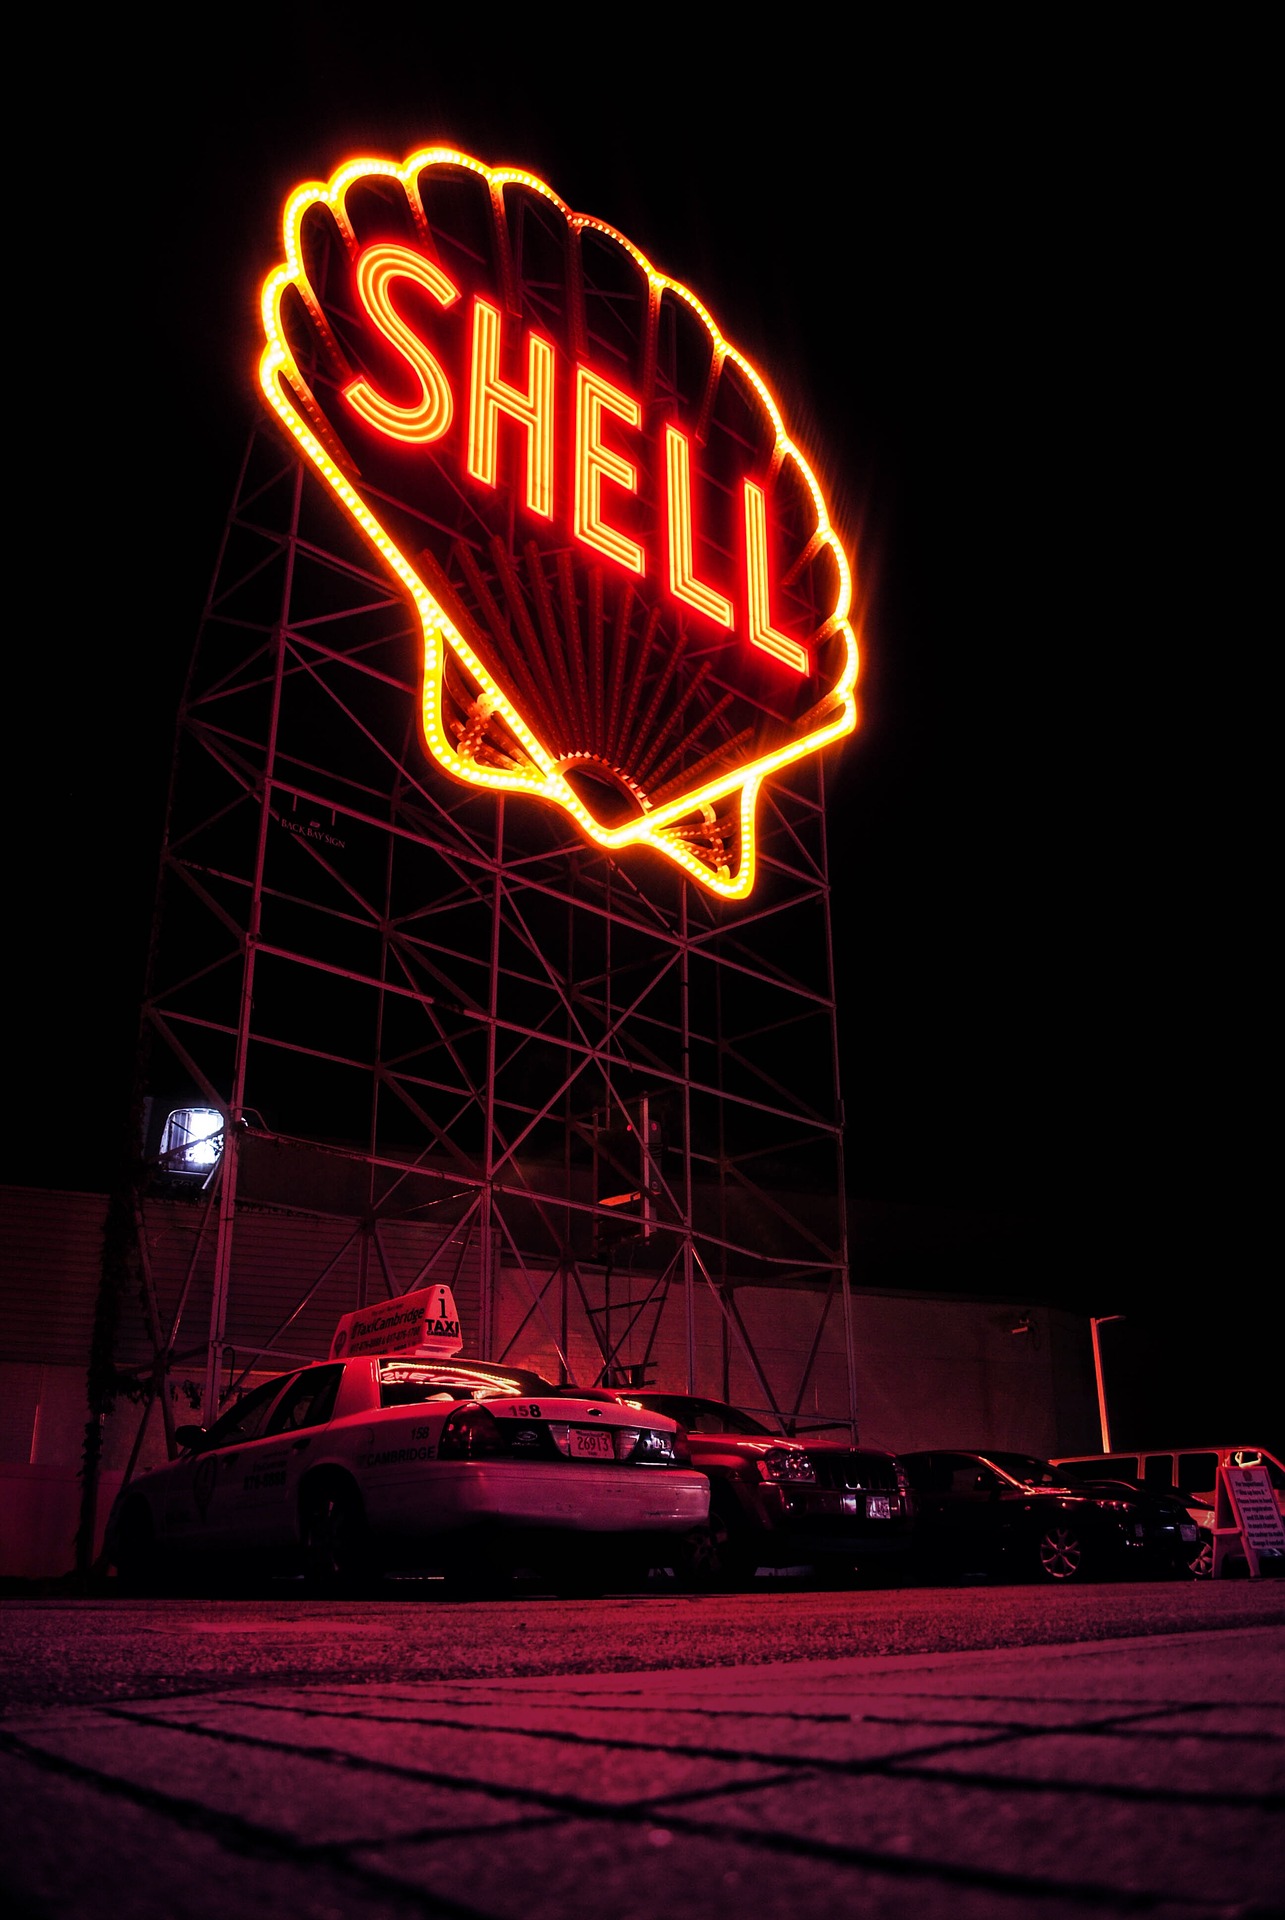 Shell Oil neon sign; image by StockSnap, via Pixabay.com.